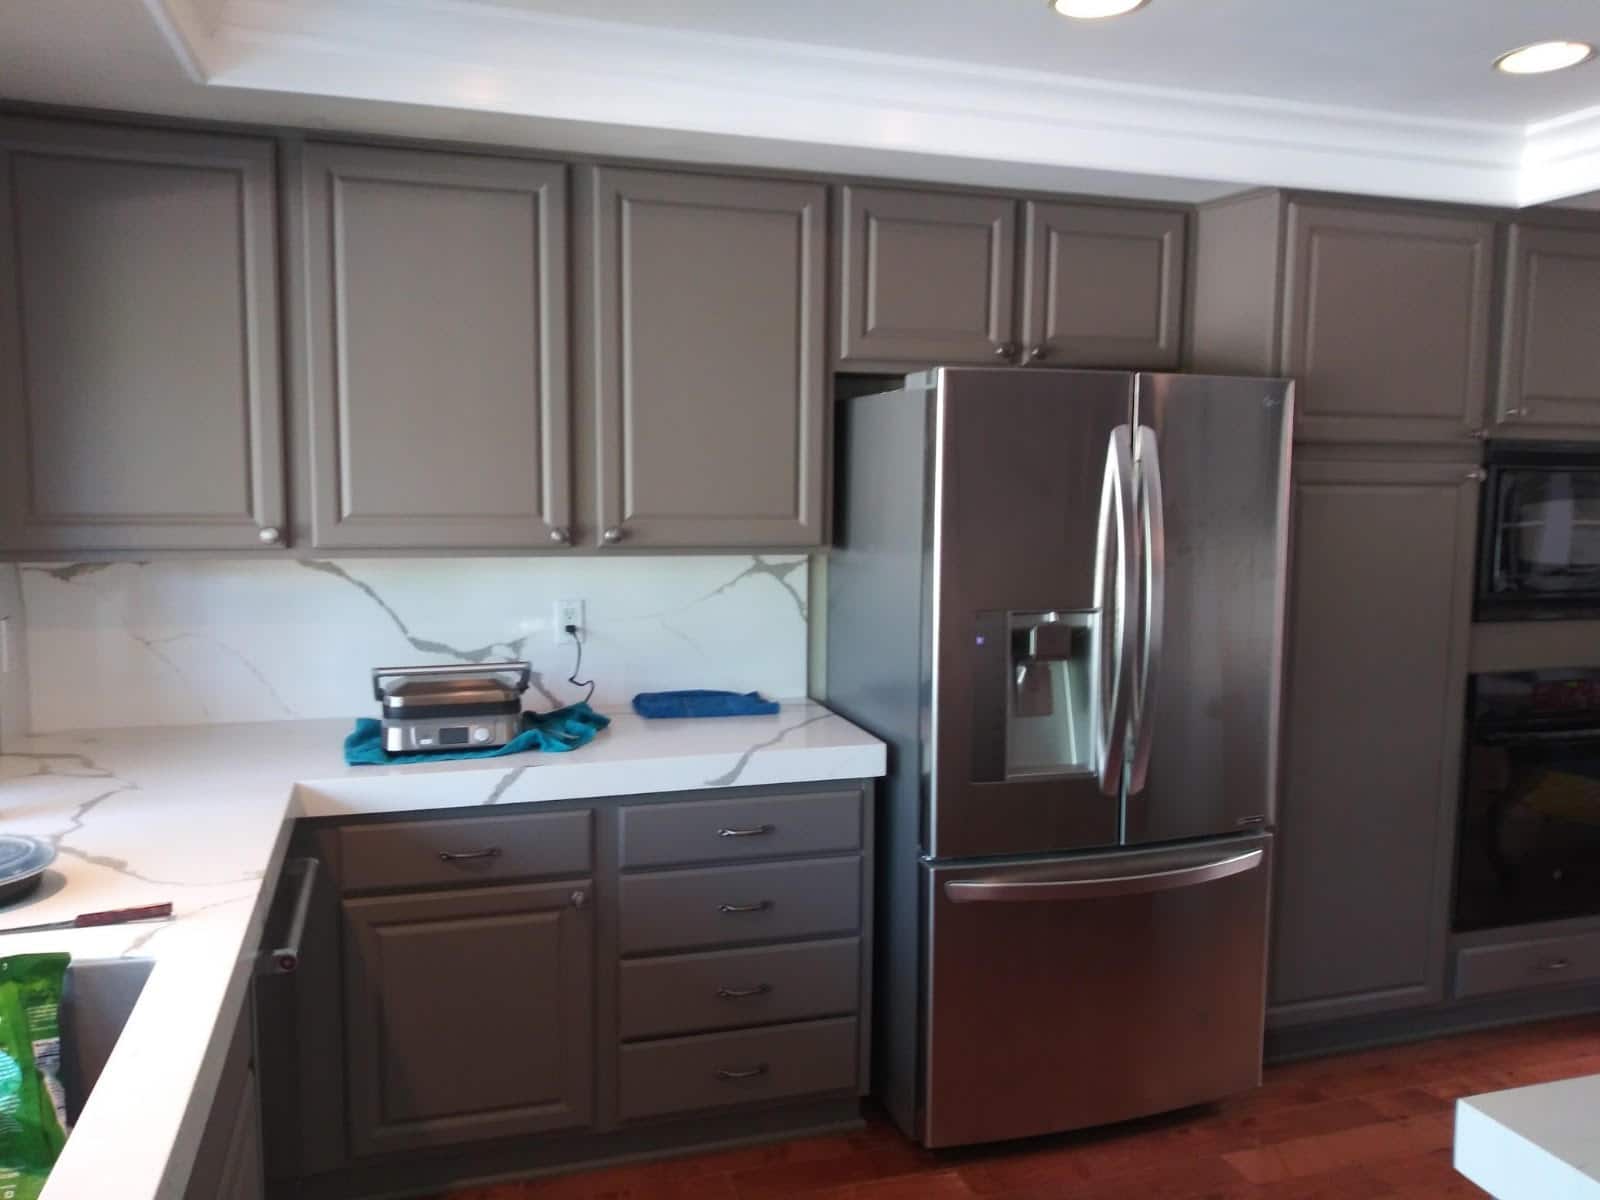 Kitchen and Bath Transformations - Kitchen Cabinet Refacing in San Juan Capistrano, CA. Grey Cabinet Refacing